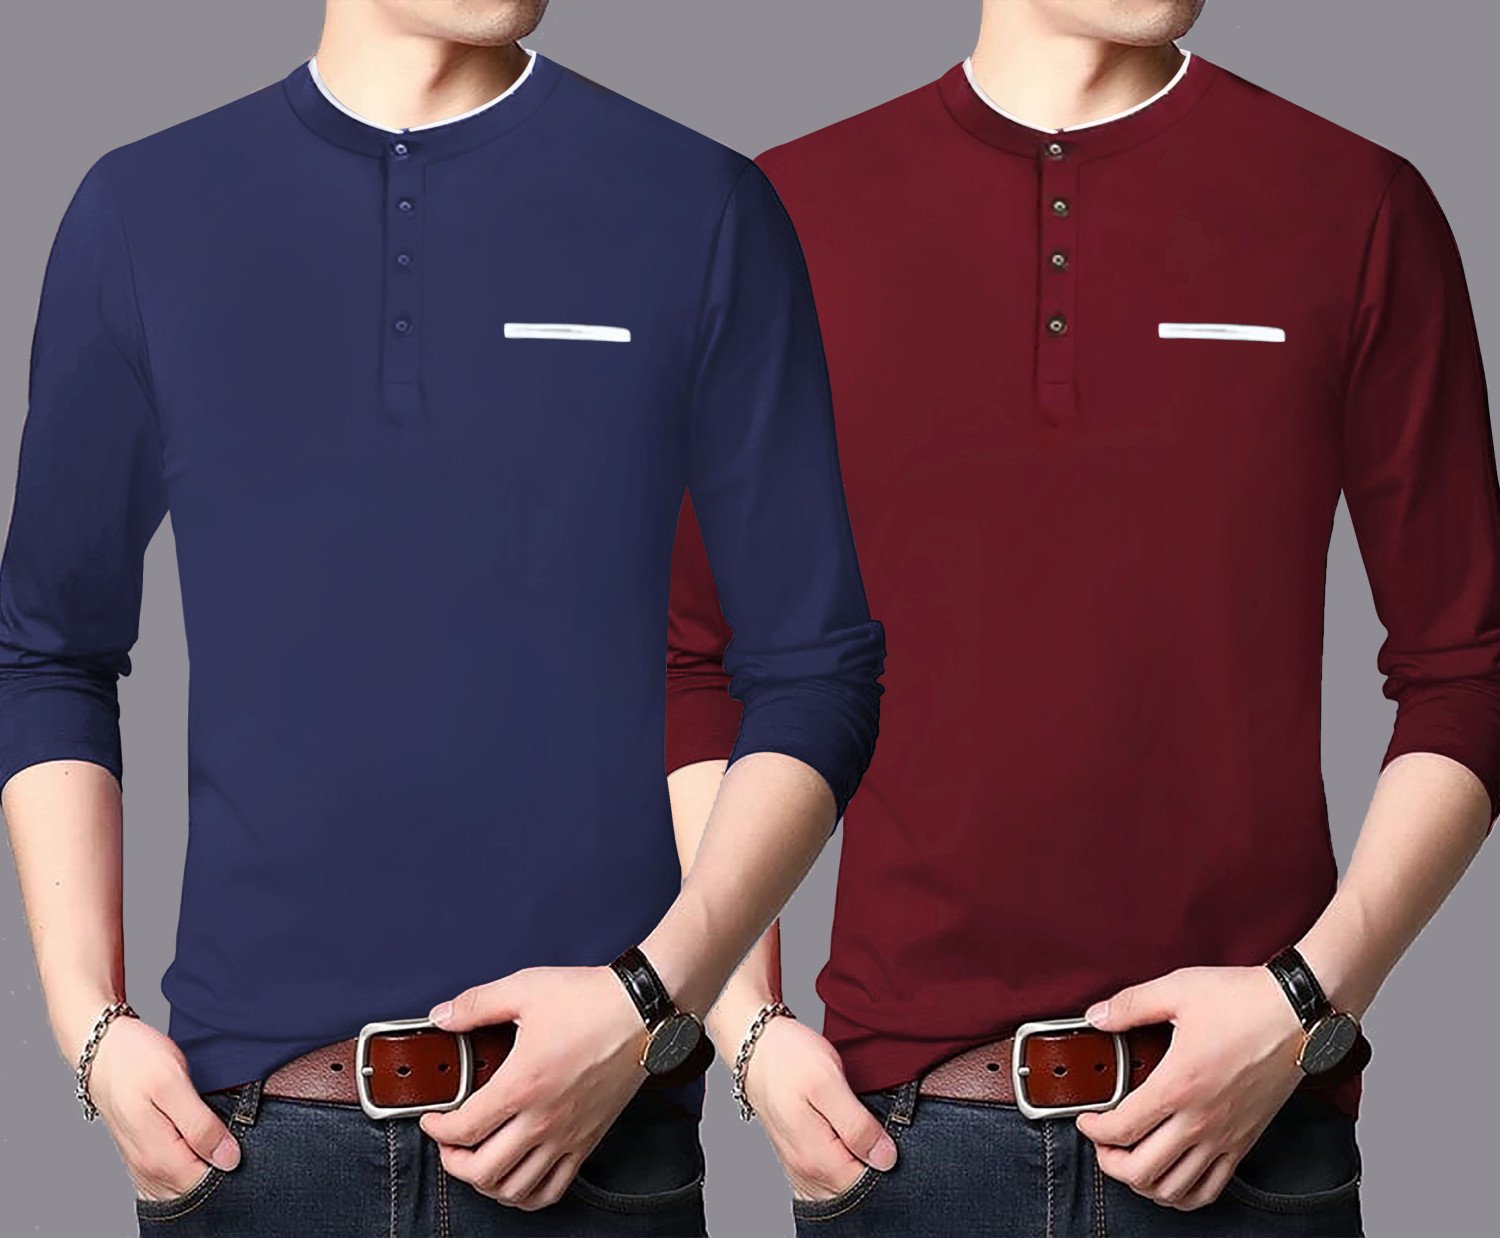 LG Garments Men's Trendy Stylish Henley Neck Full Sleeves Cotton T-Shirt Combo - Multi-colour (Pack Of 2) | Men's T-Shirt (2 in 1) (S, M, L, XL, XXL)